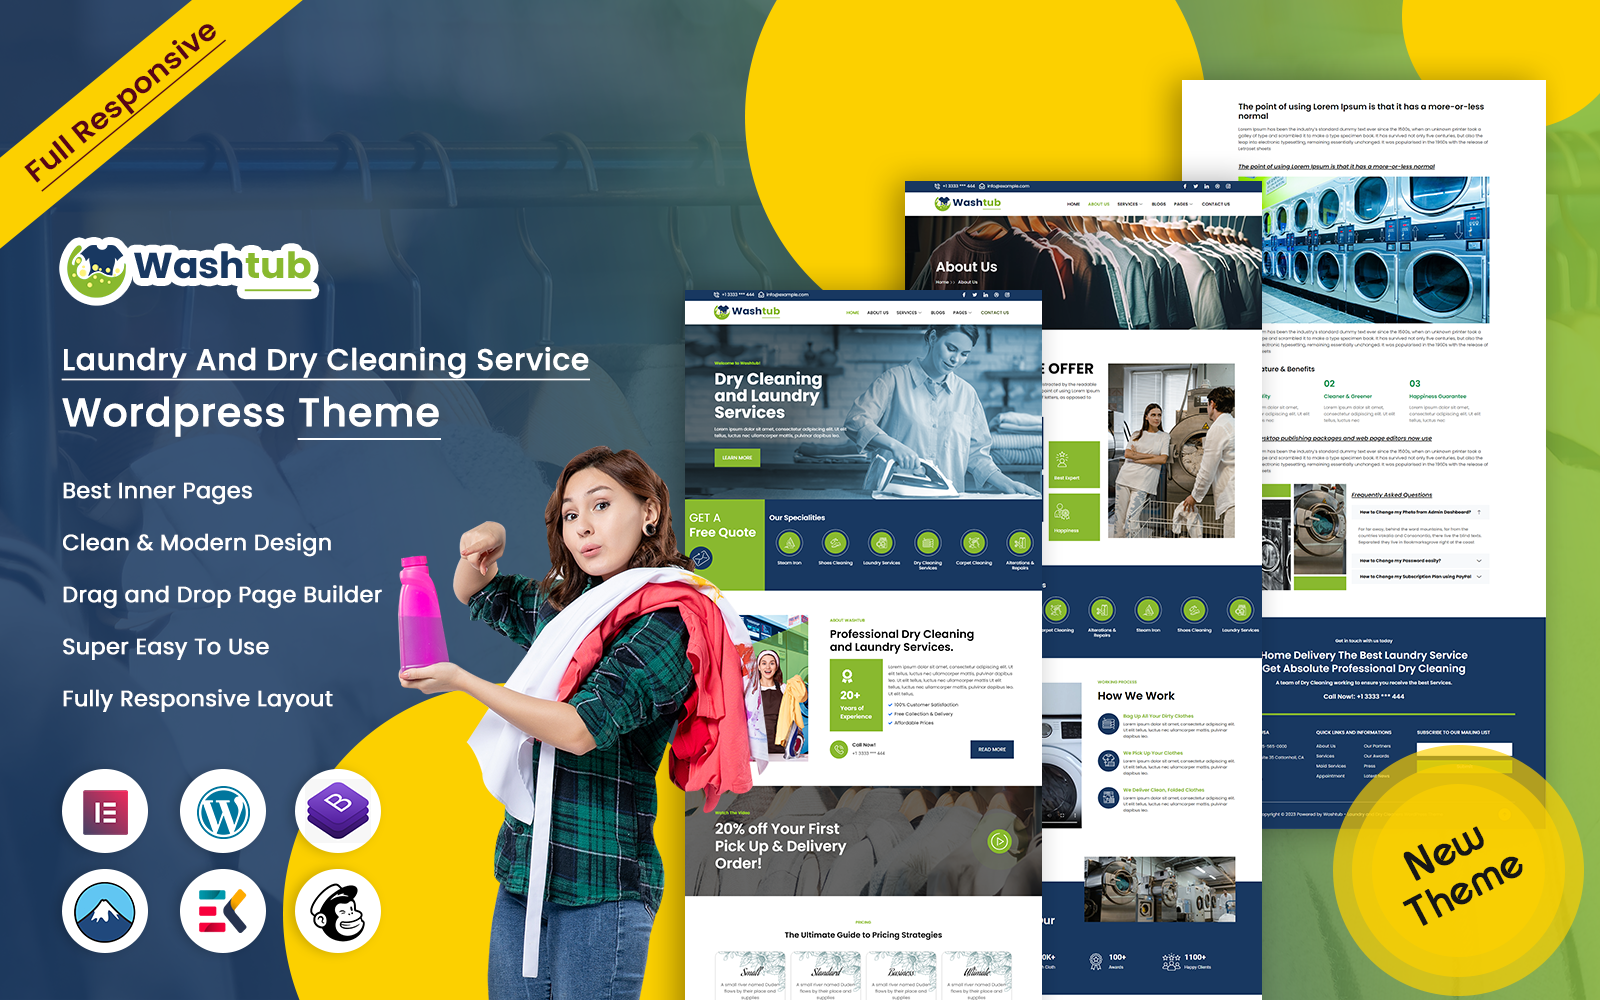 Washtub - Laundry And Dry Cleaning Service WordPress Theme